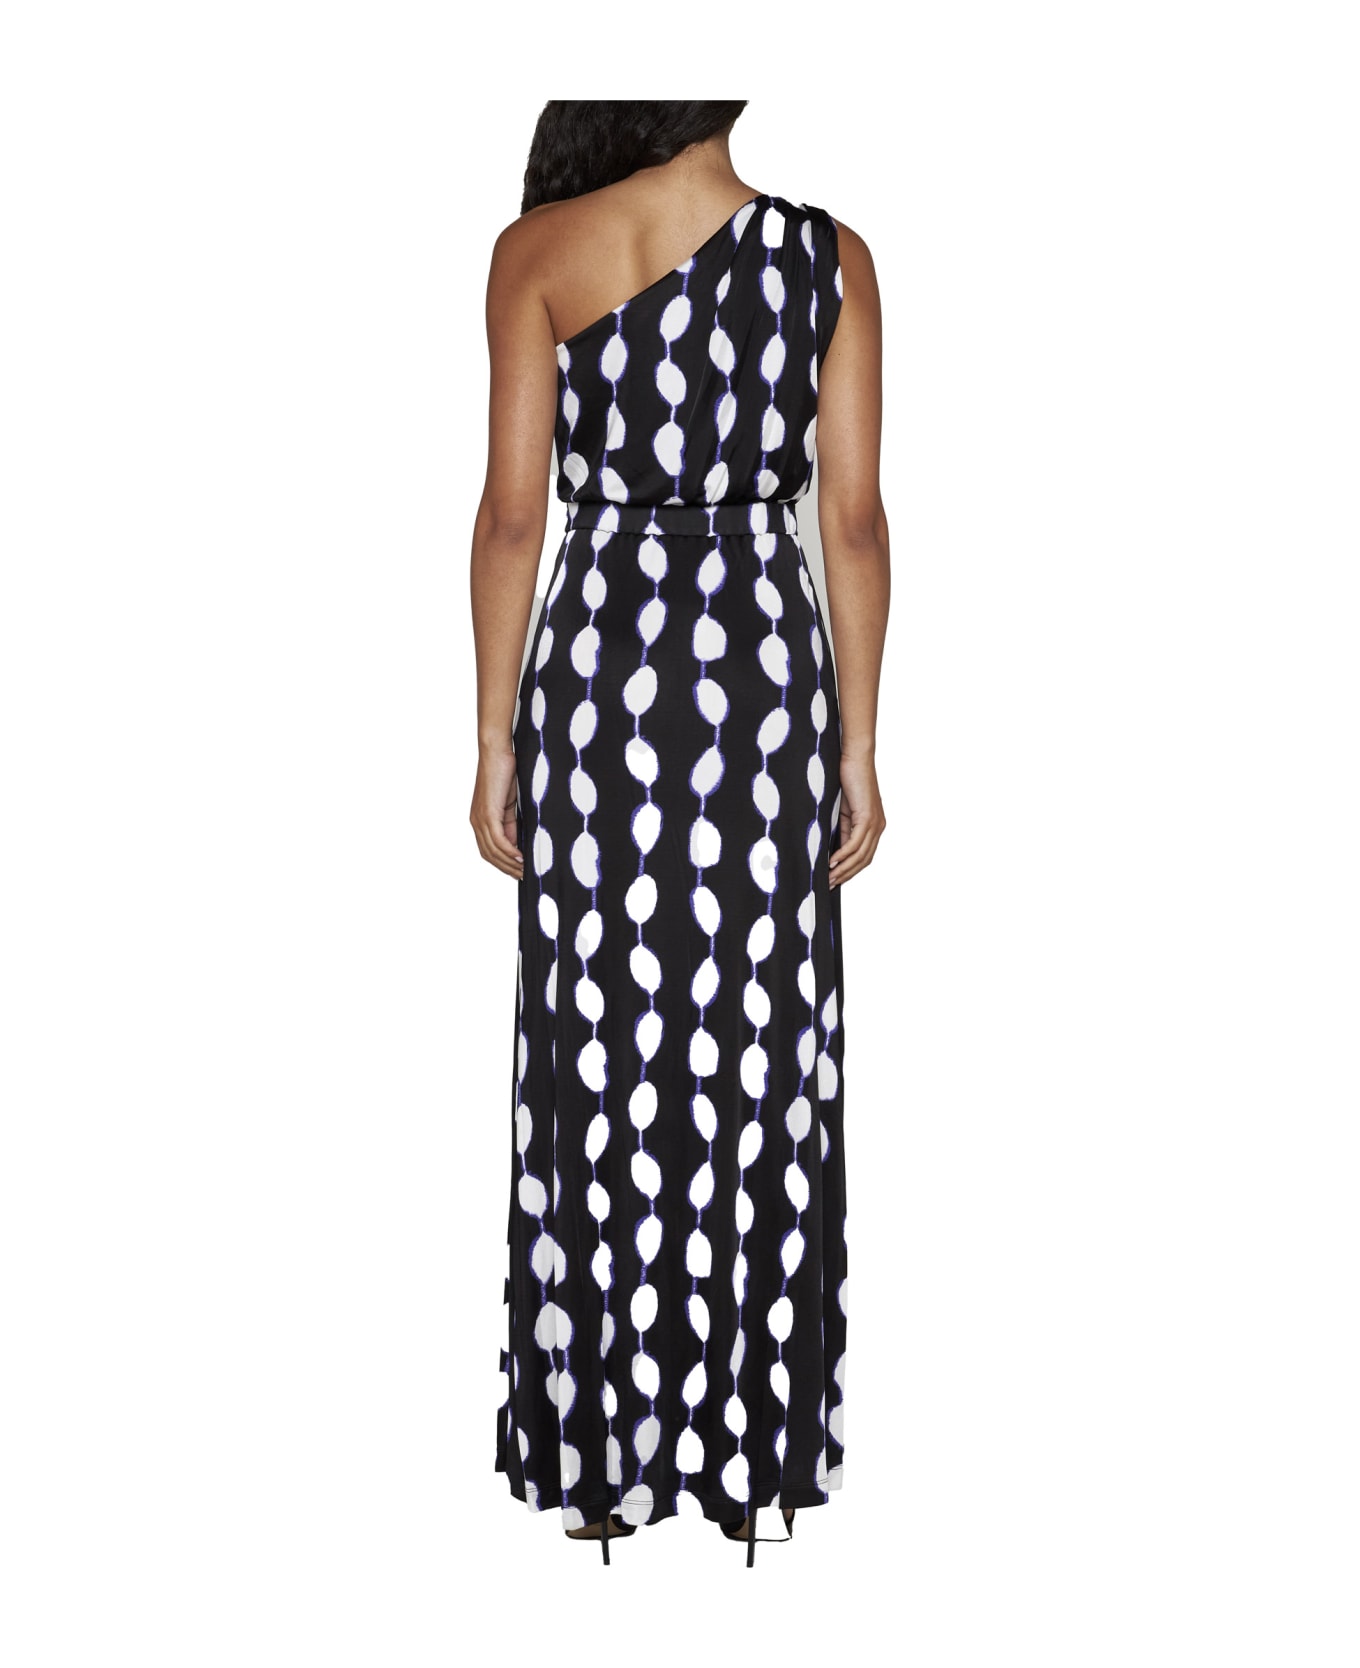 Diane Von Furstenberg Dress - Shibori dot lg black